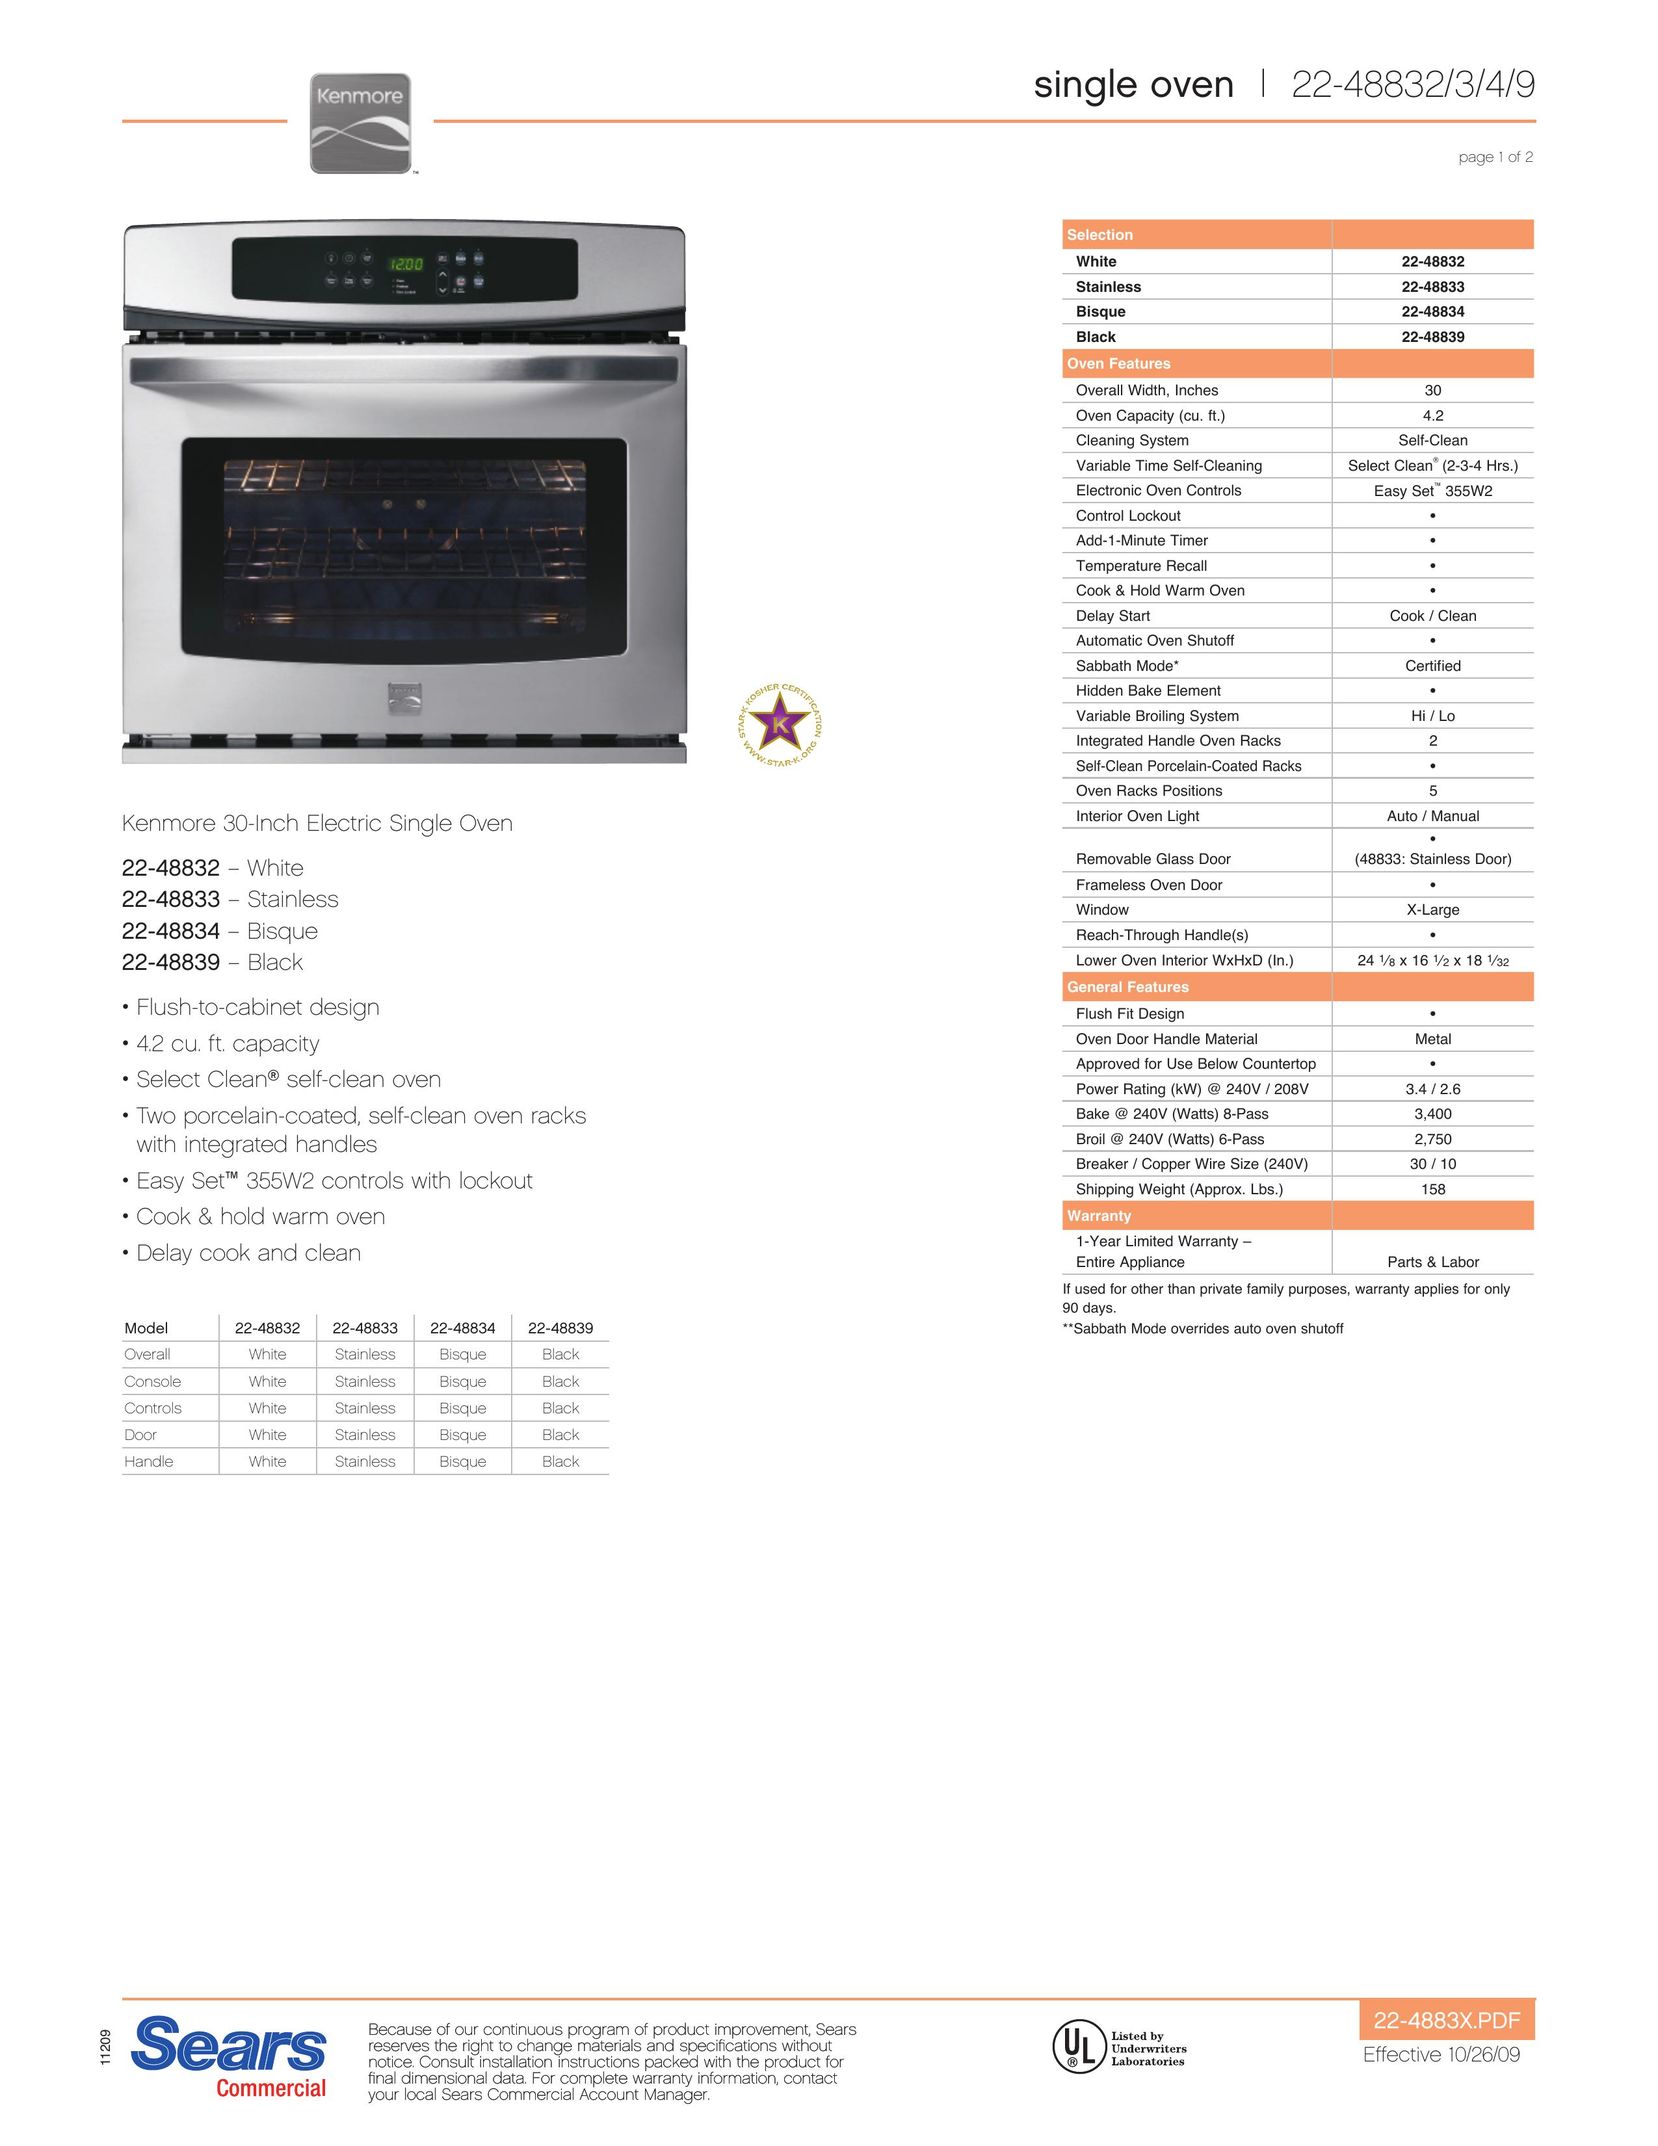 Kenmore 22-48833 Oven User Manual